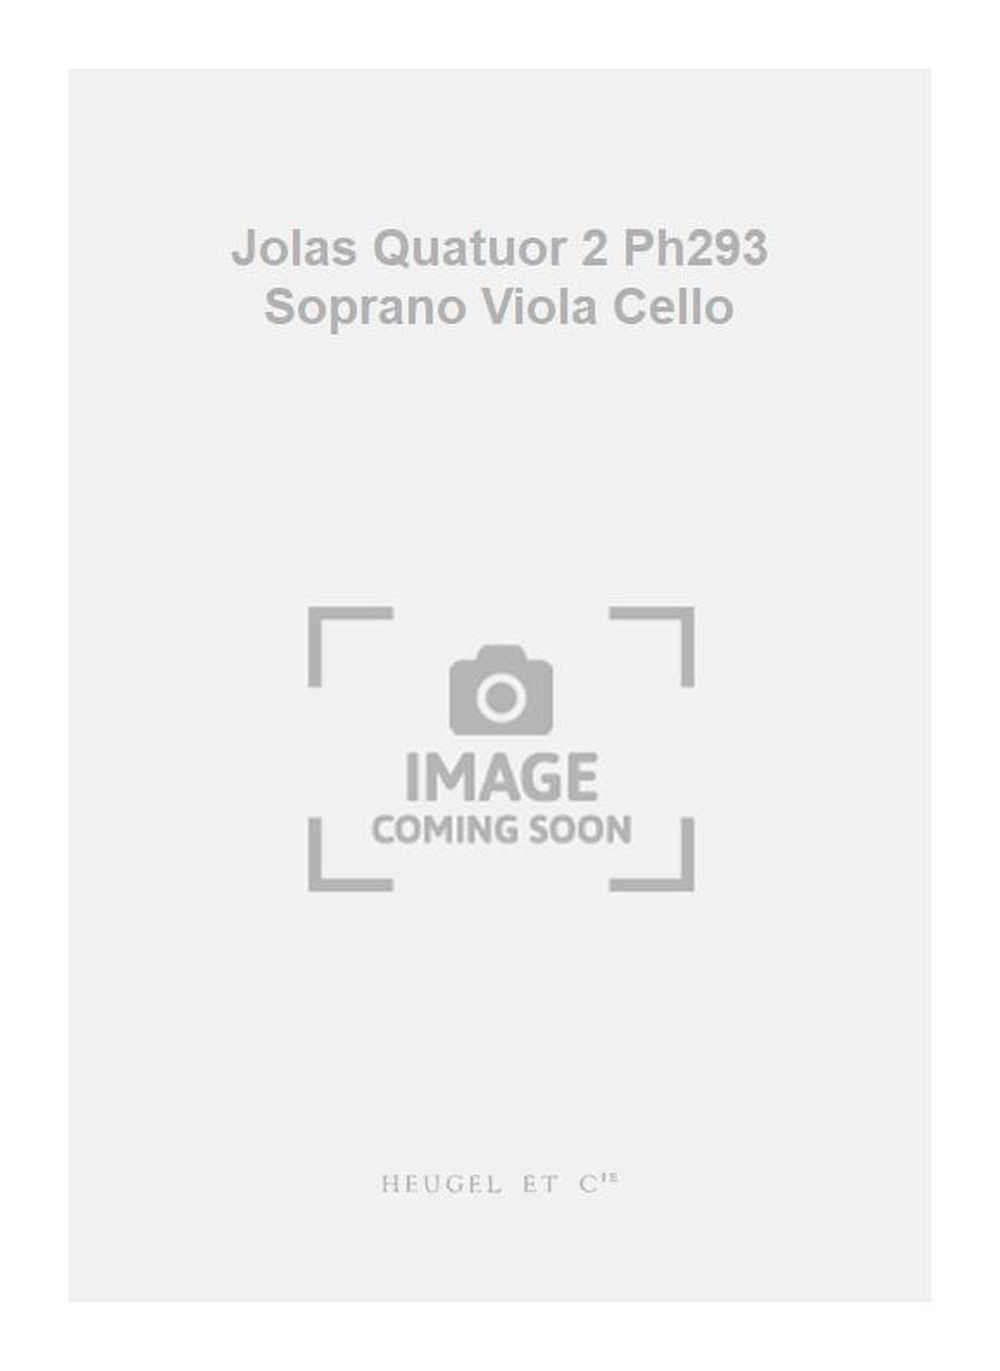 Betsy Jolas: Jolas Quatuor 2 Ph293 Soprano Viola Cello